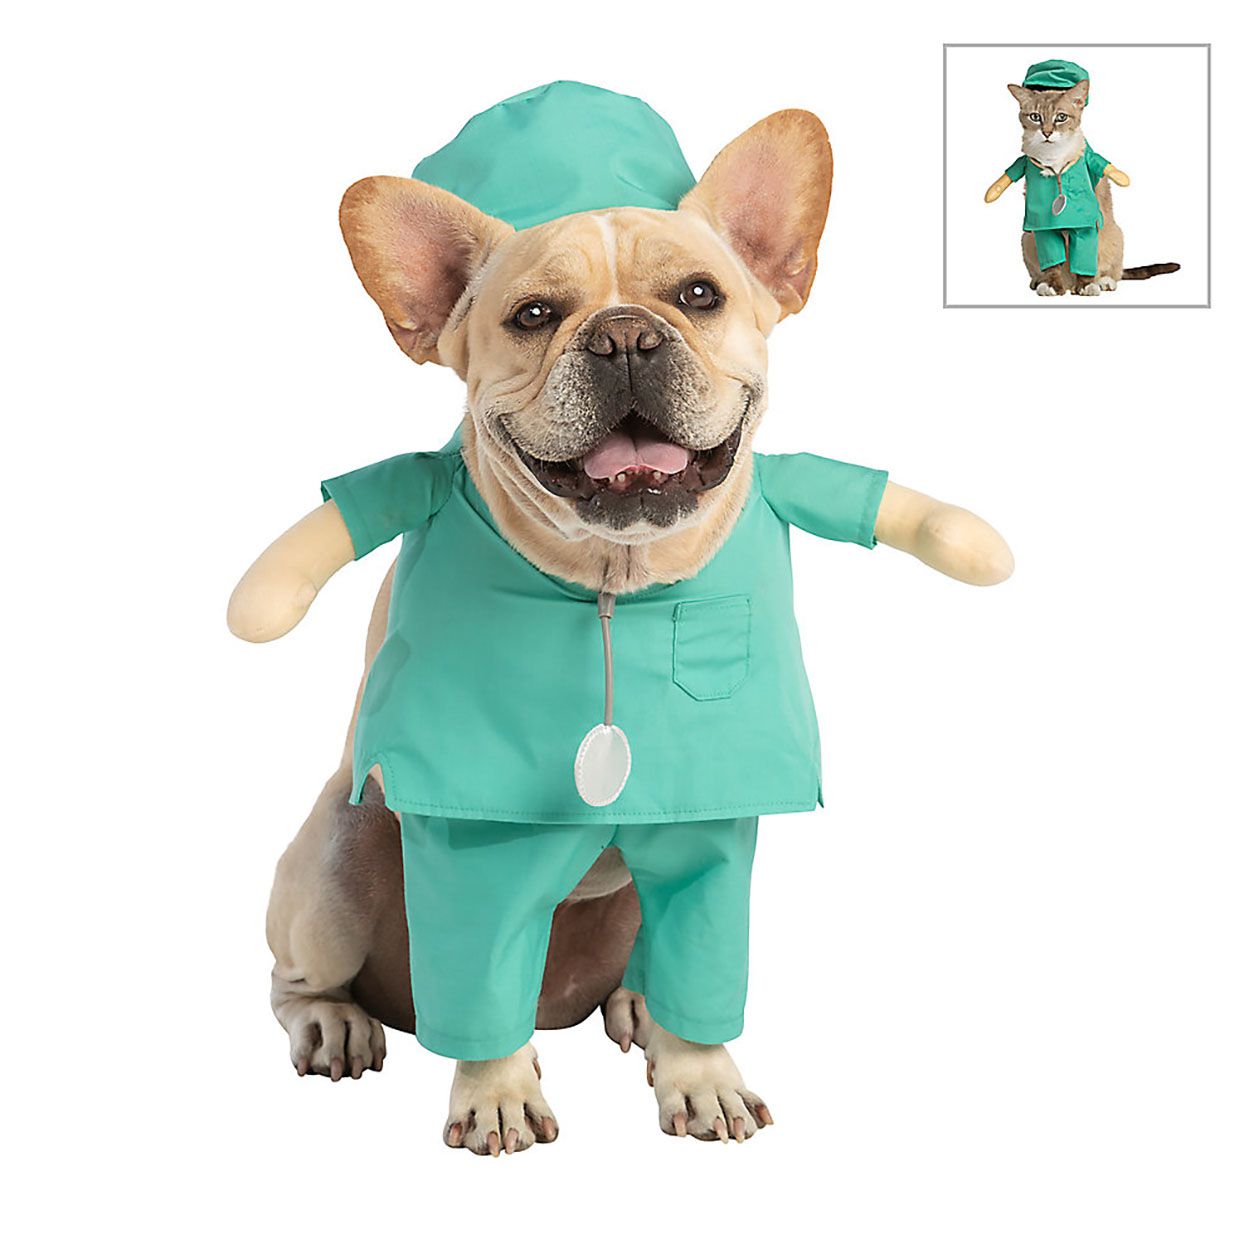 Teal green nurse scrubs dog costume on a French bulldog